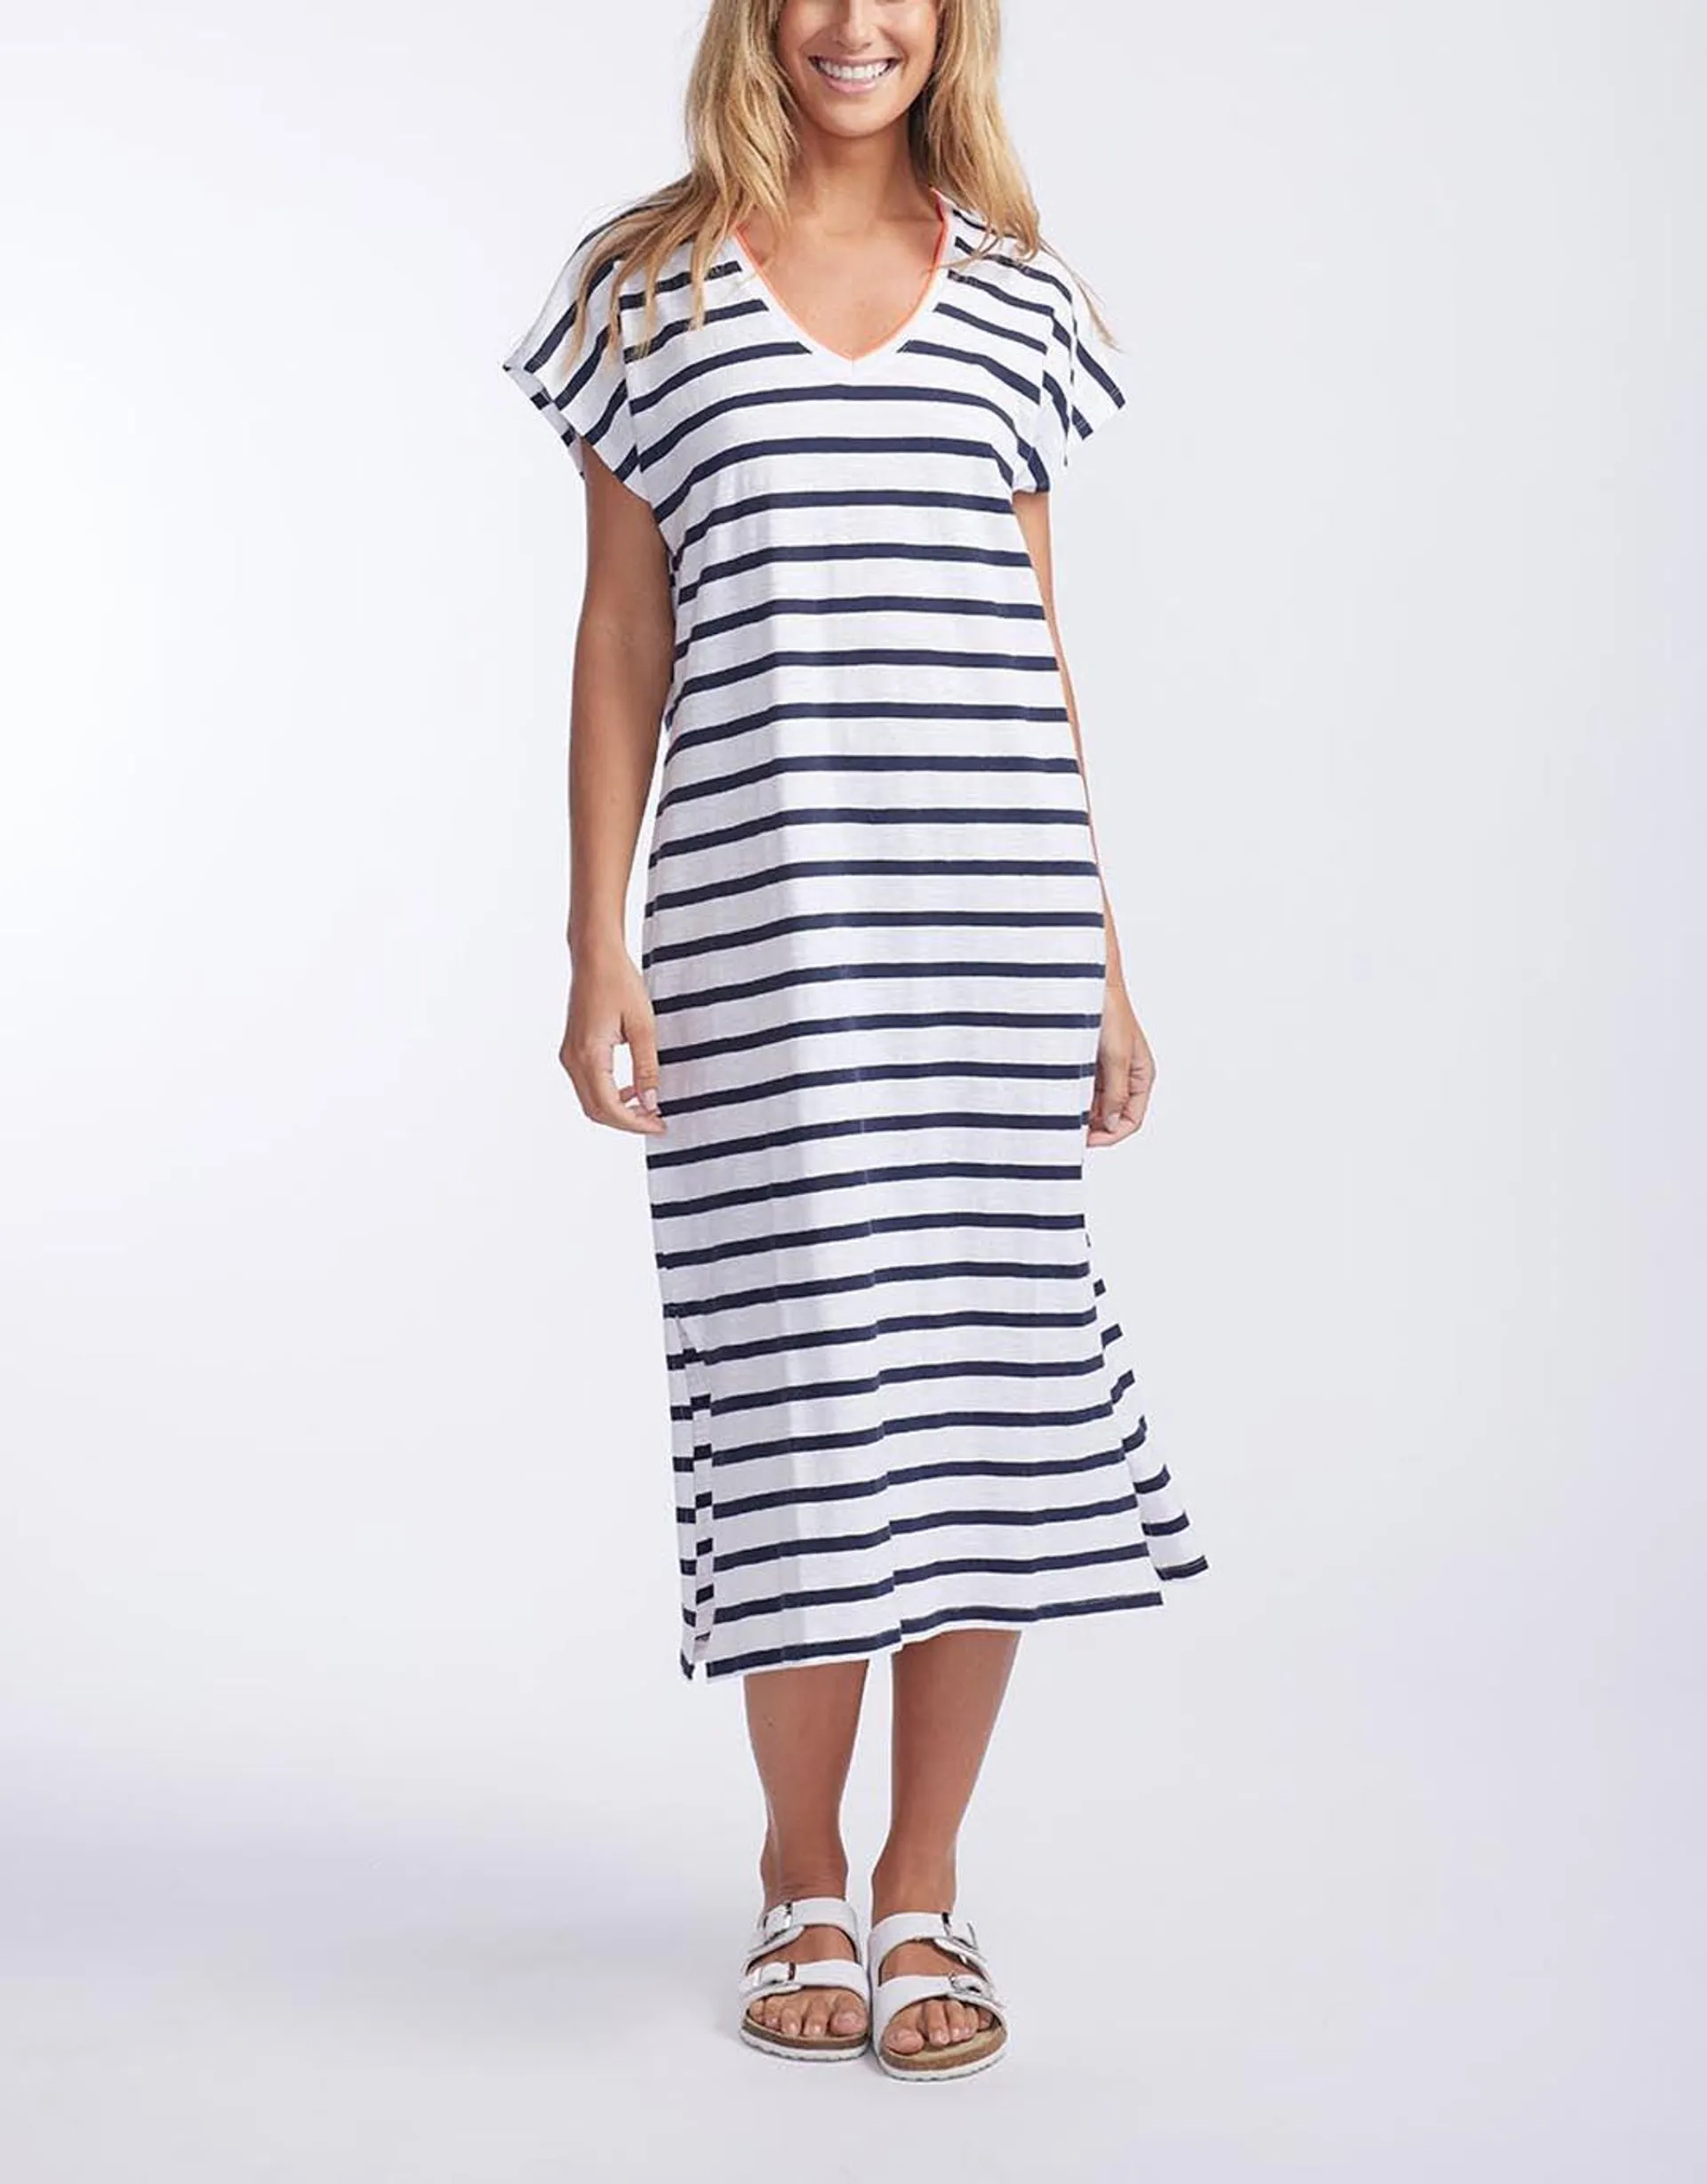 St. Lucia T-Shirt Dress - Navy/White Stripe